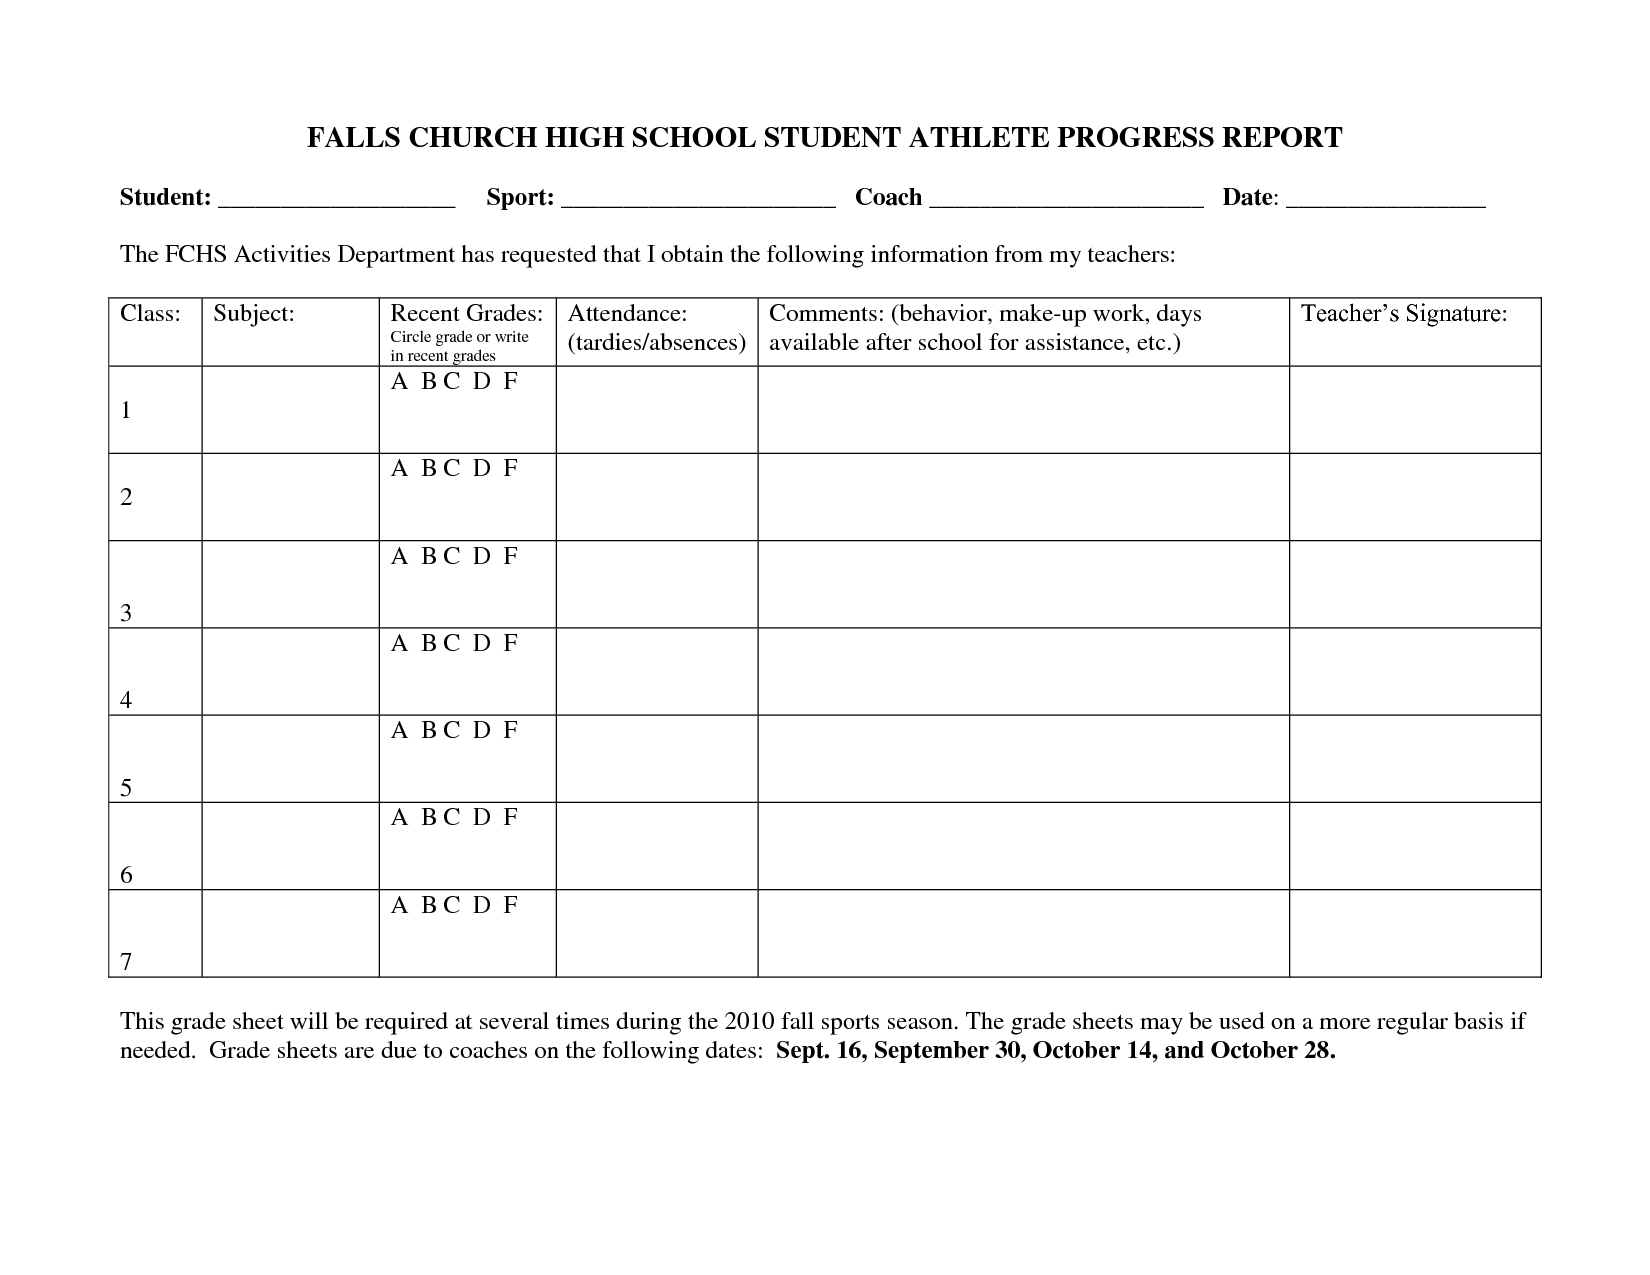 Falls Church High School Student Athlete Progress Report Regarding School Progress Report Template